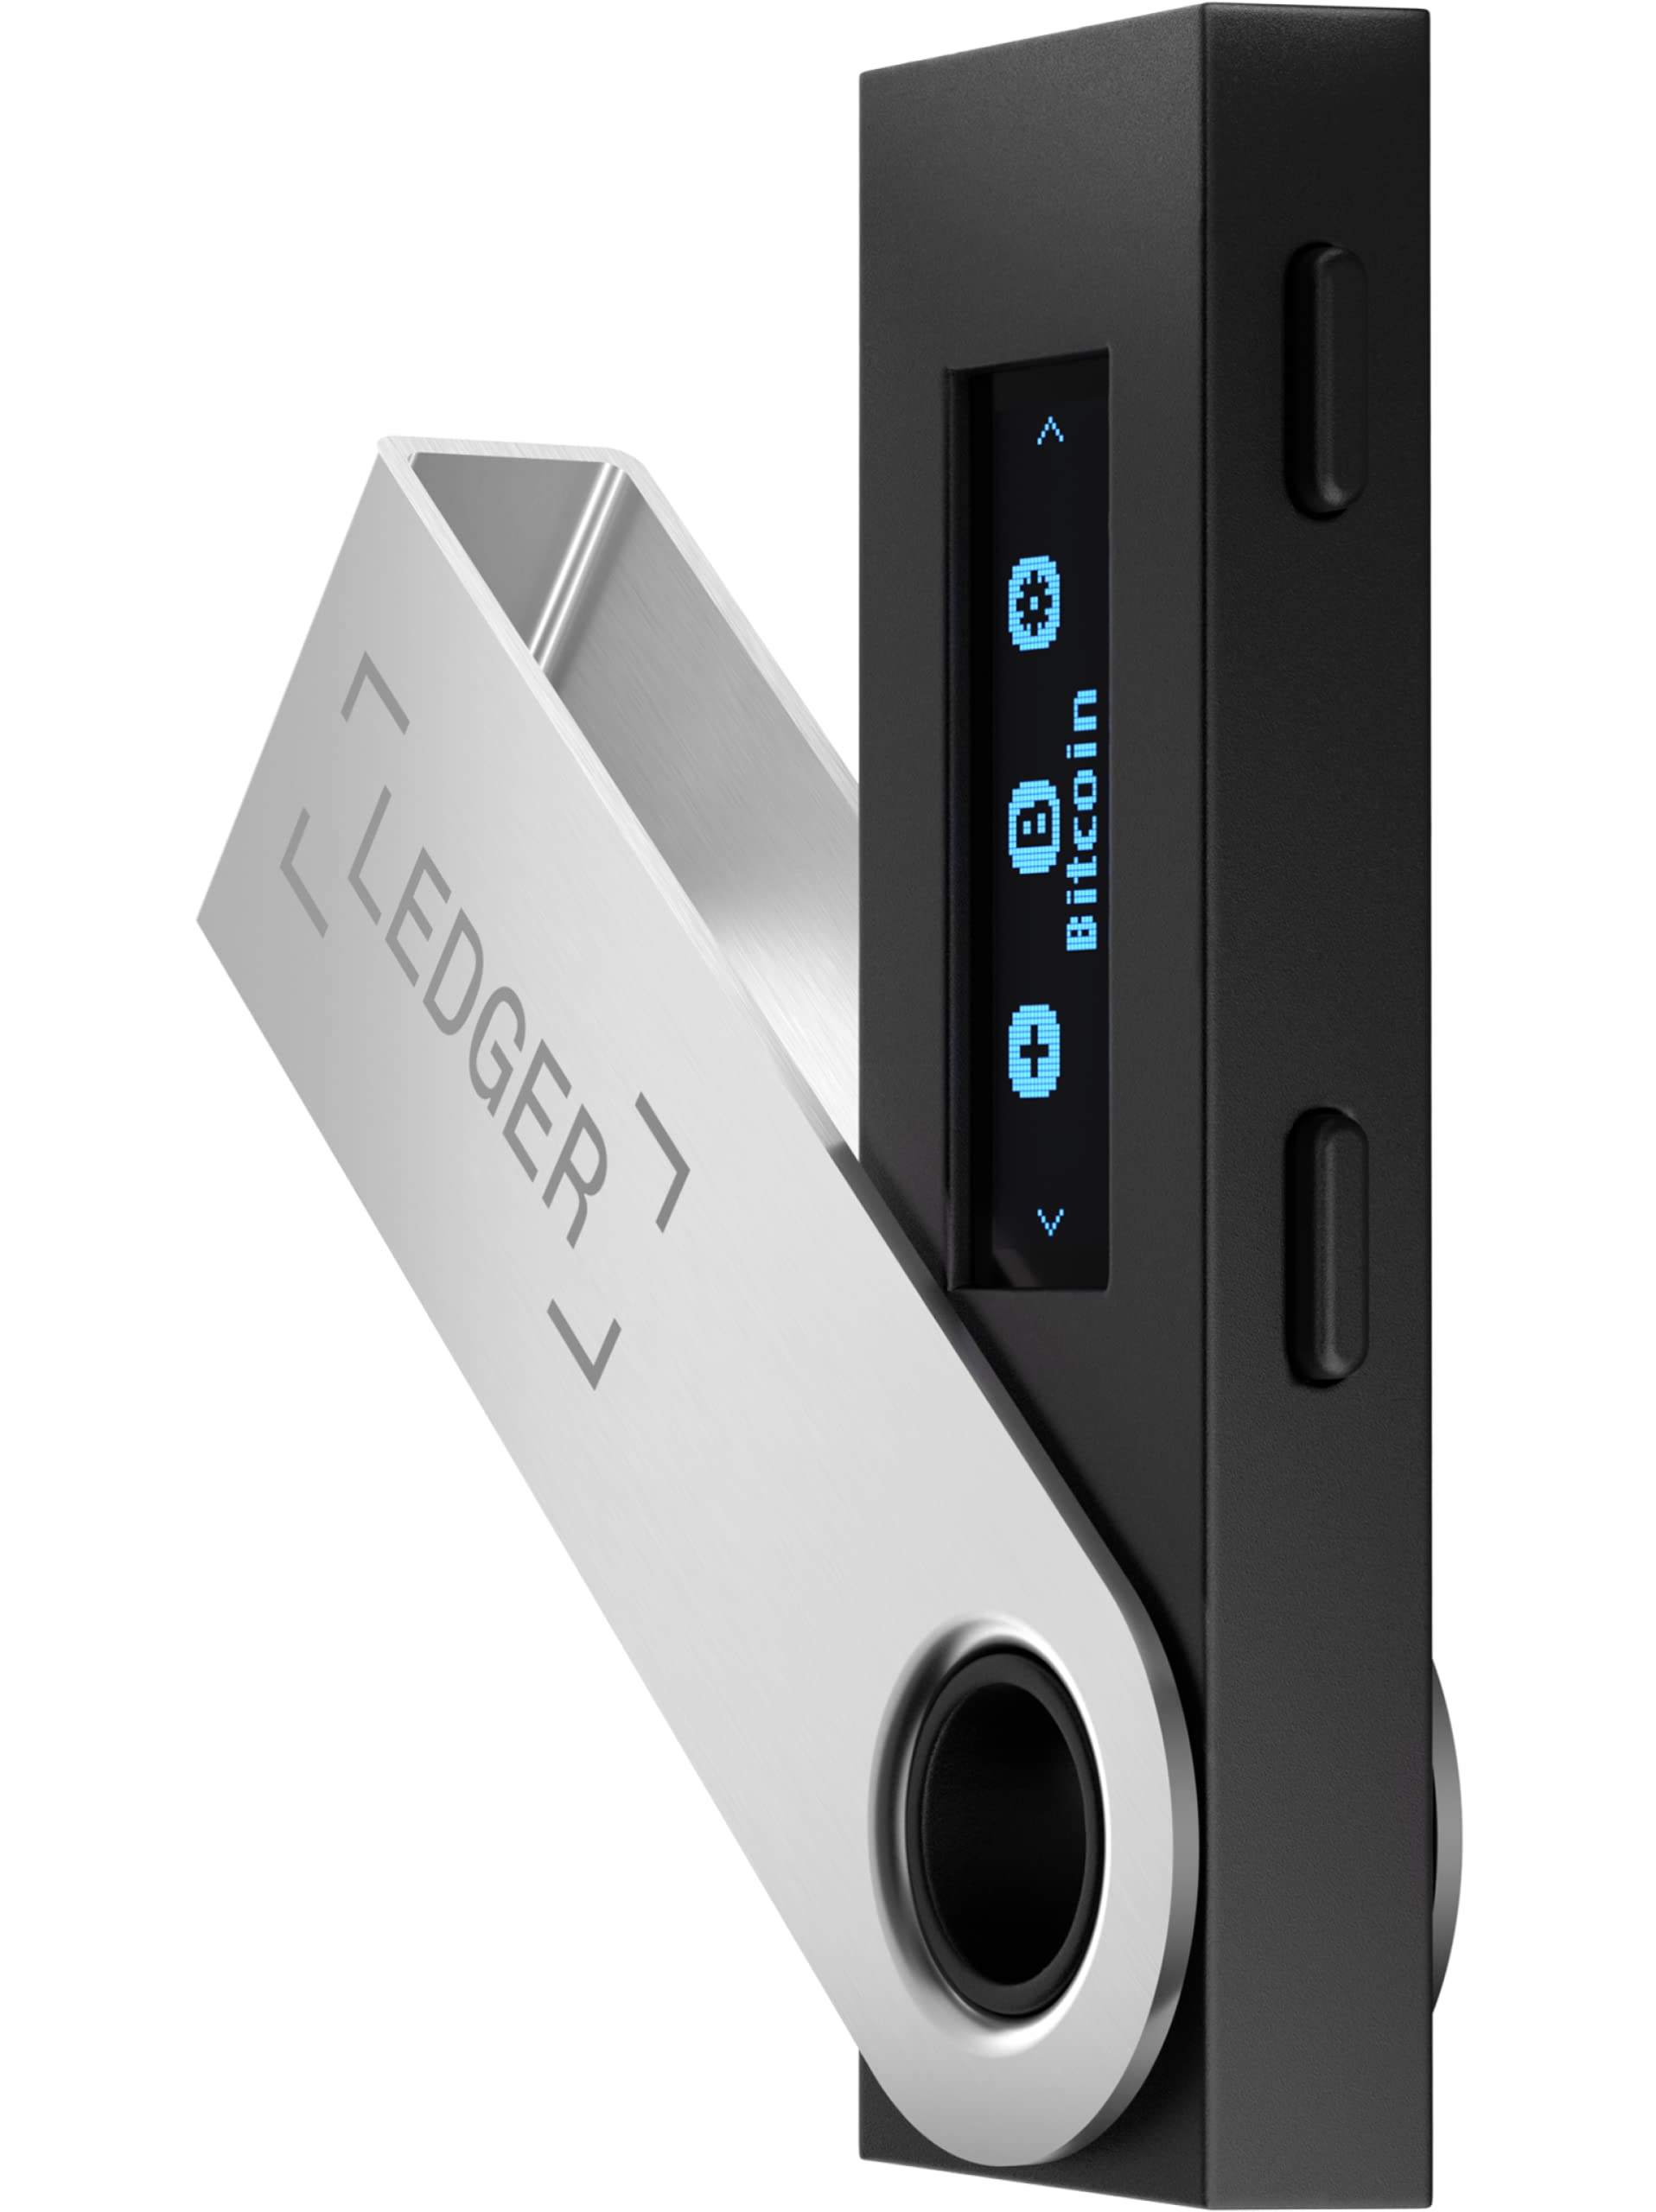 Ledger Nano S Plus - Matte Black - Hardware wallet - Ledger Official Partner - family-gadgets.ru